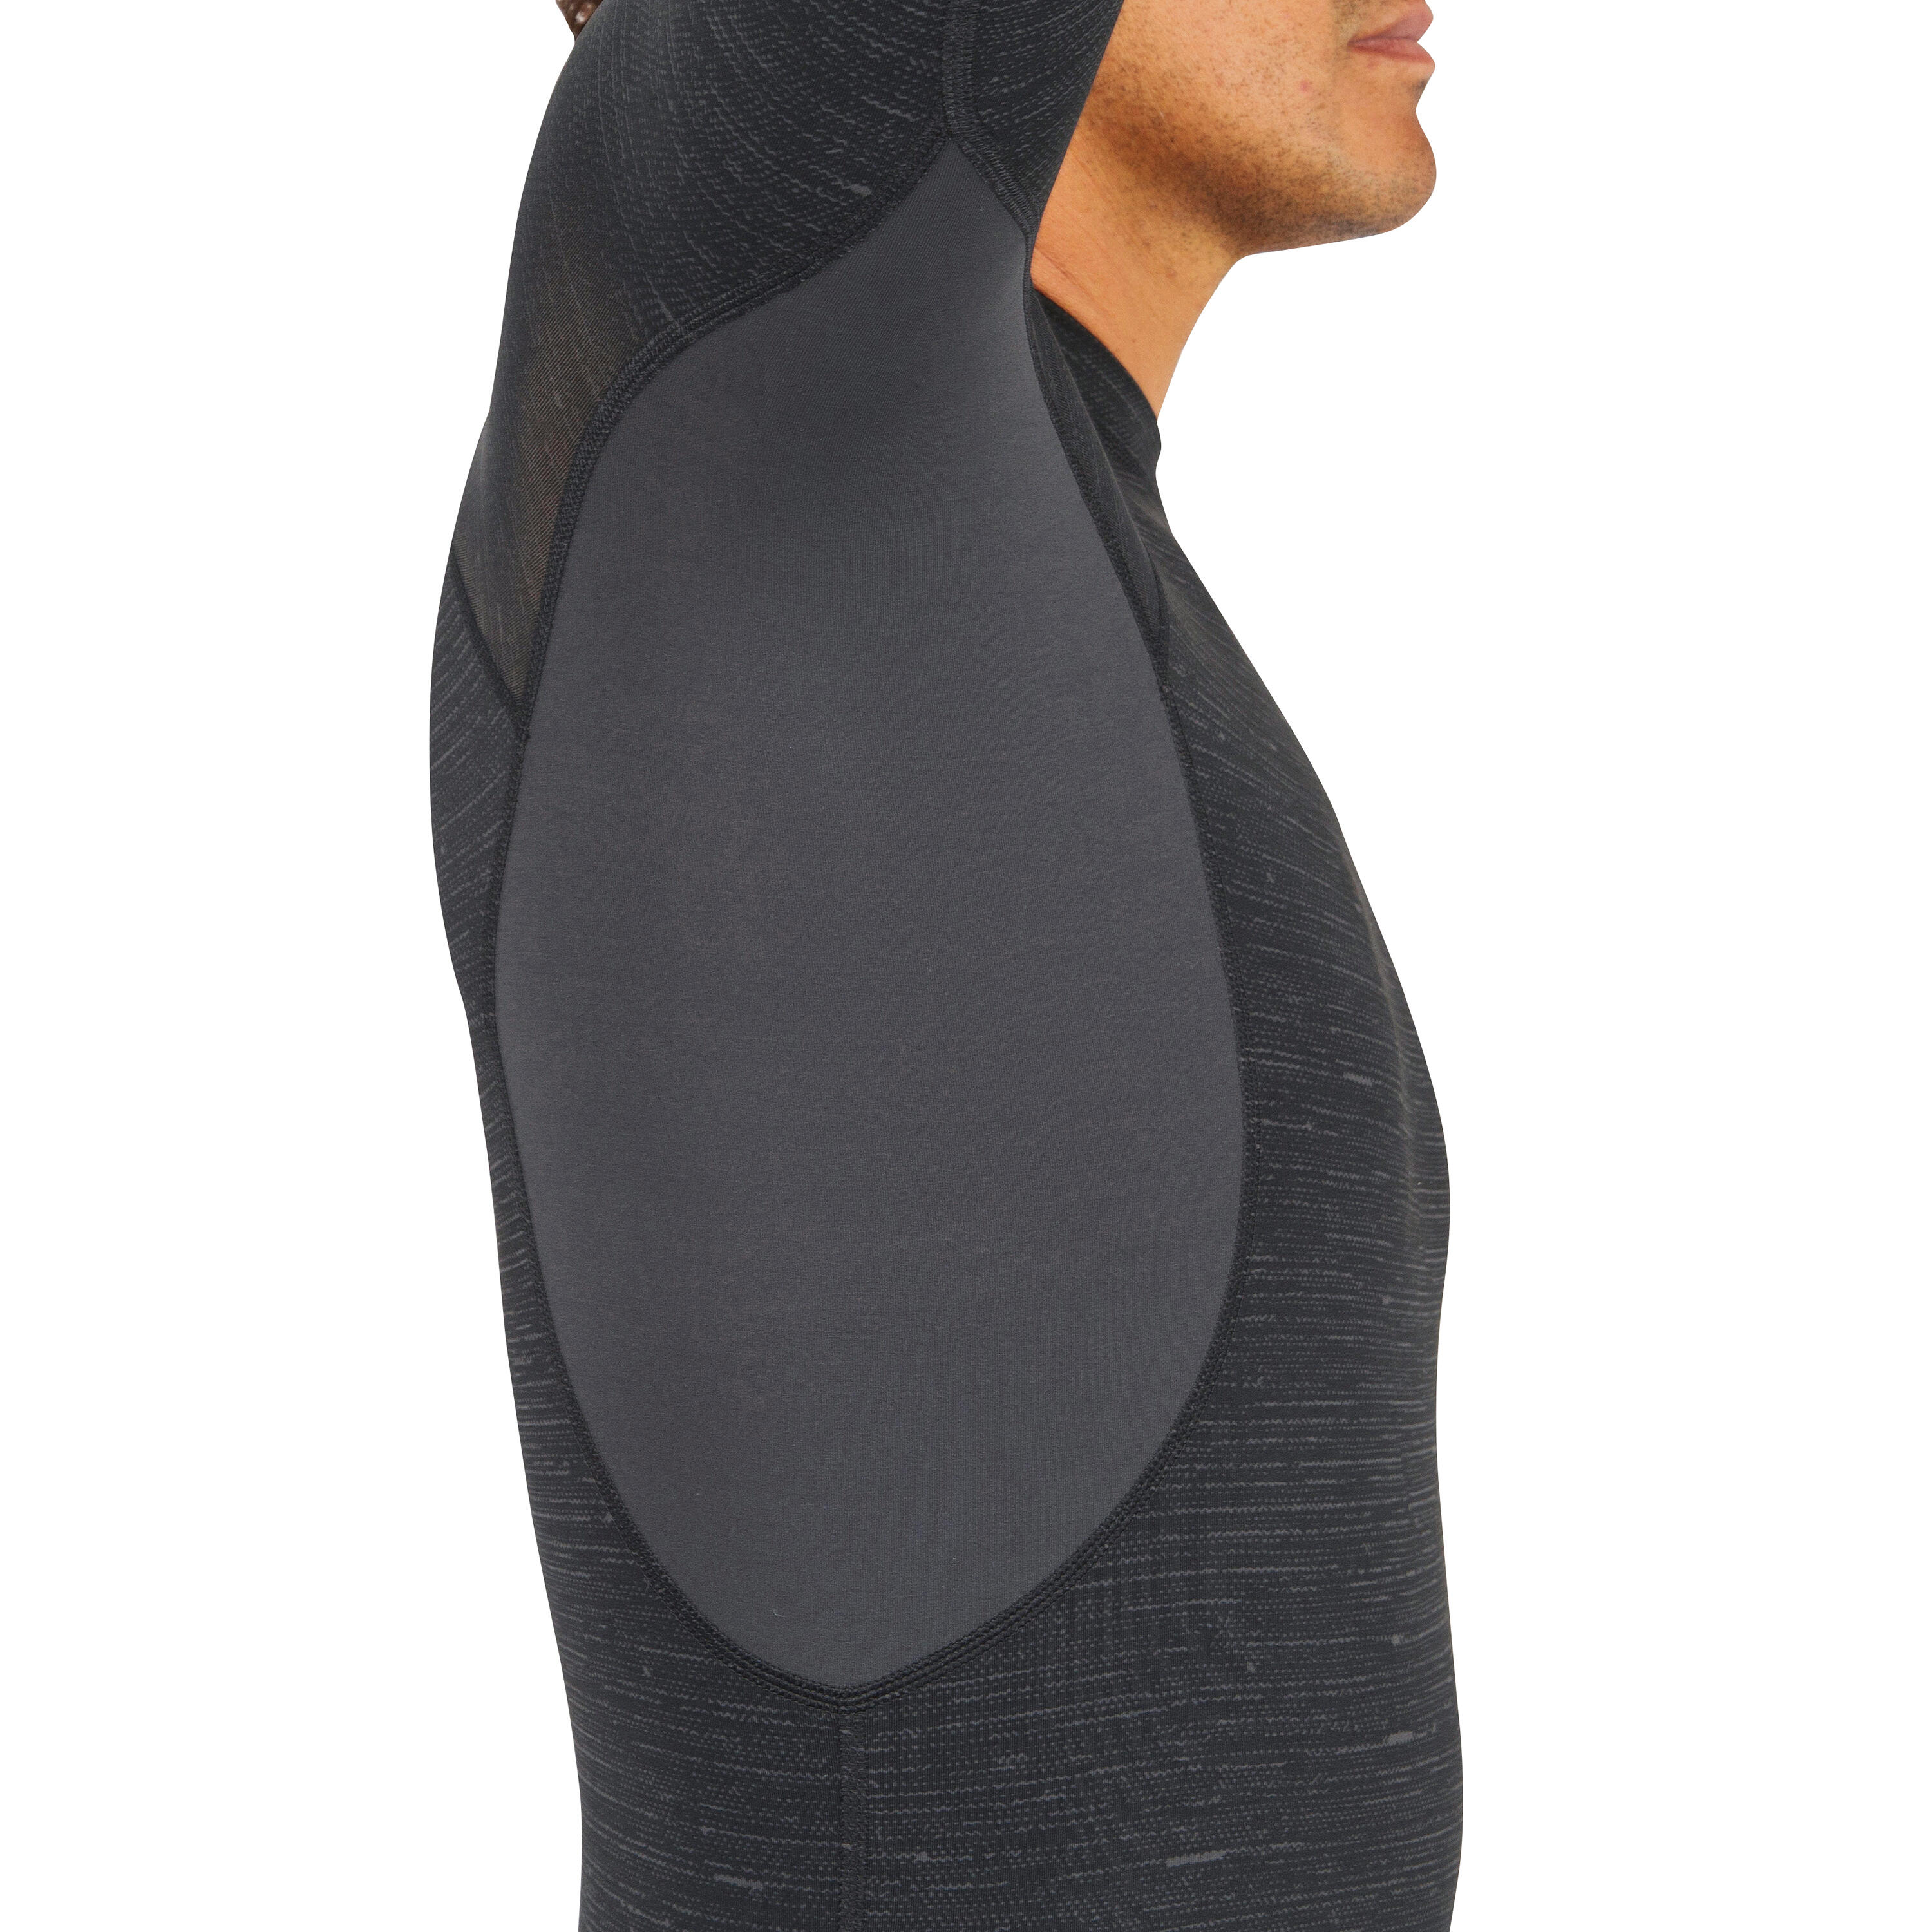 Men's Surfing Long Sleeve UV Protection Top T-Shirt 900 - Black 6/12